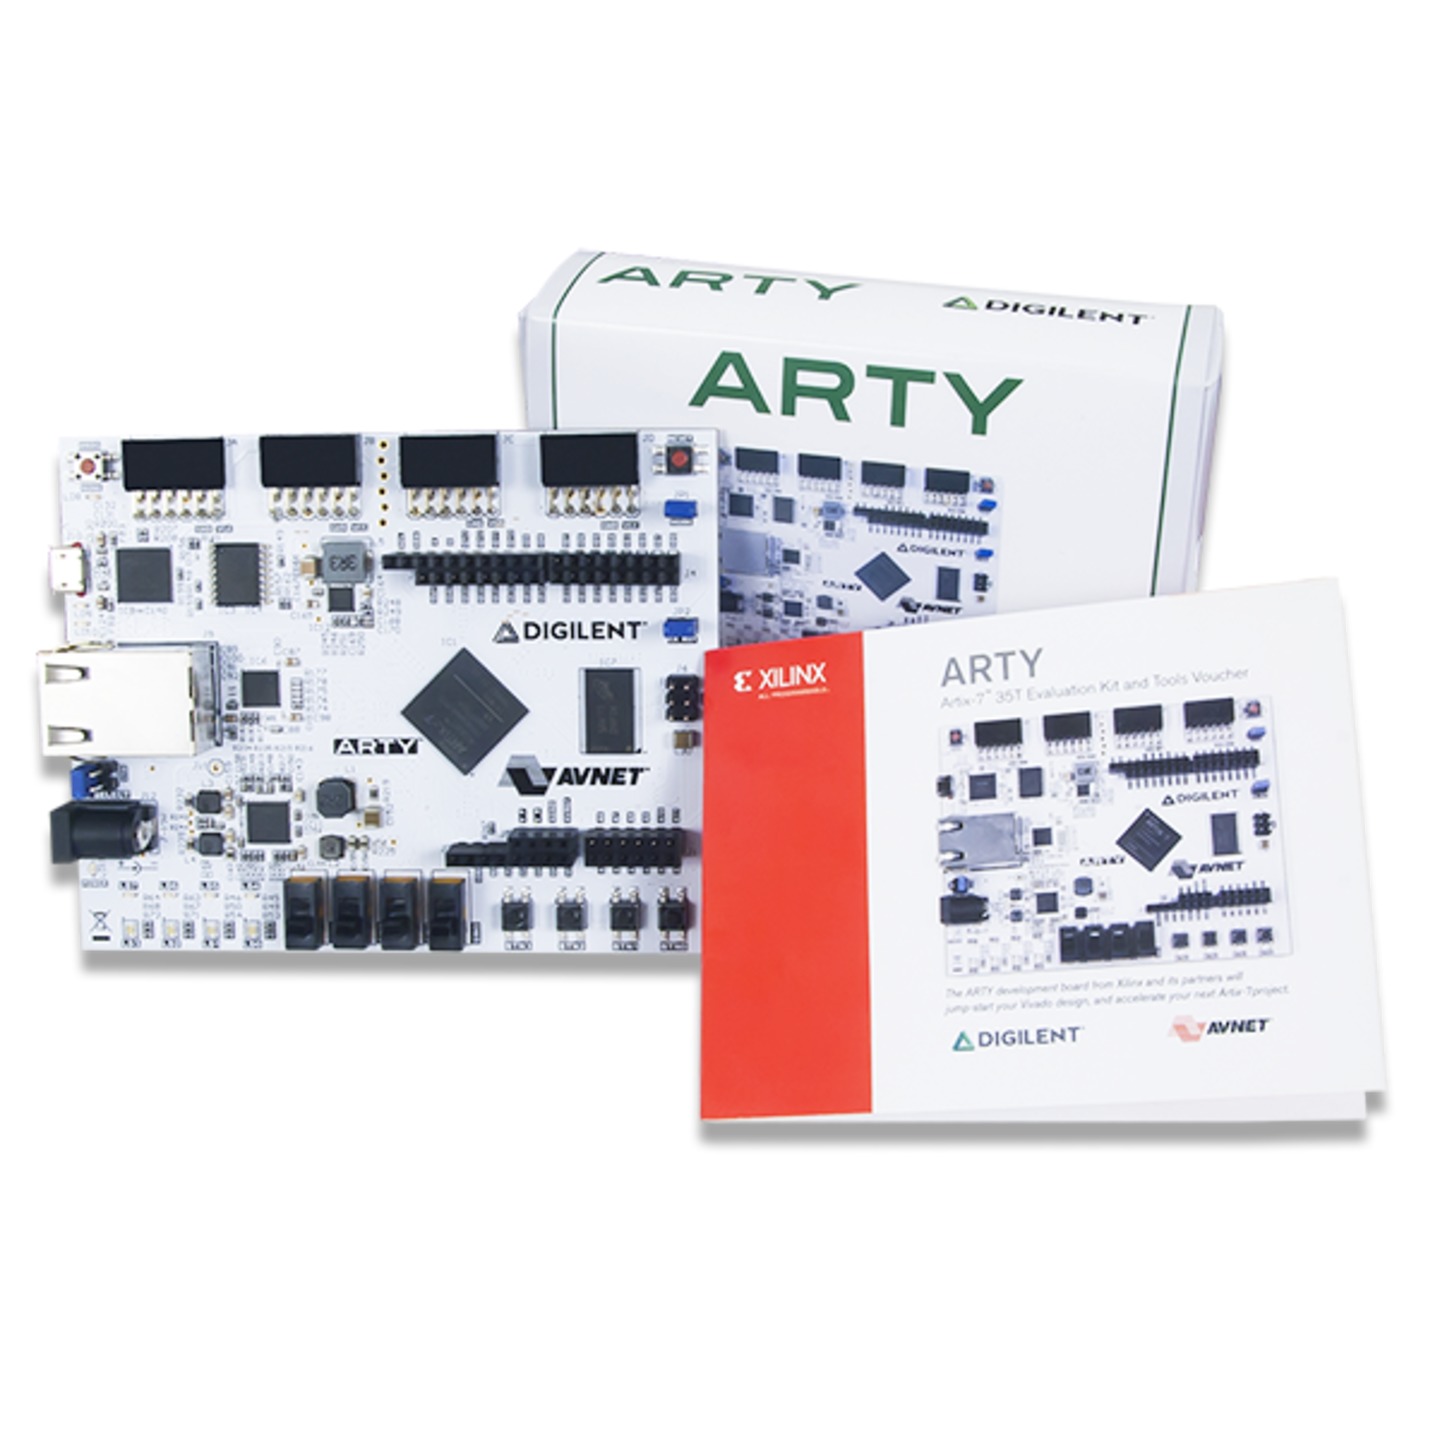 Arty Artix-7 FPGA: Development Board